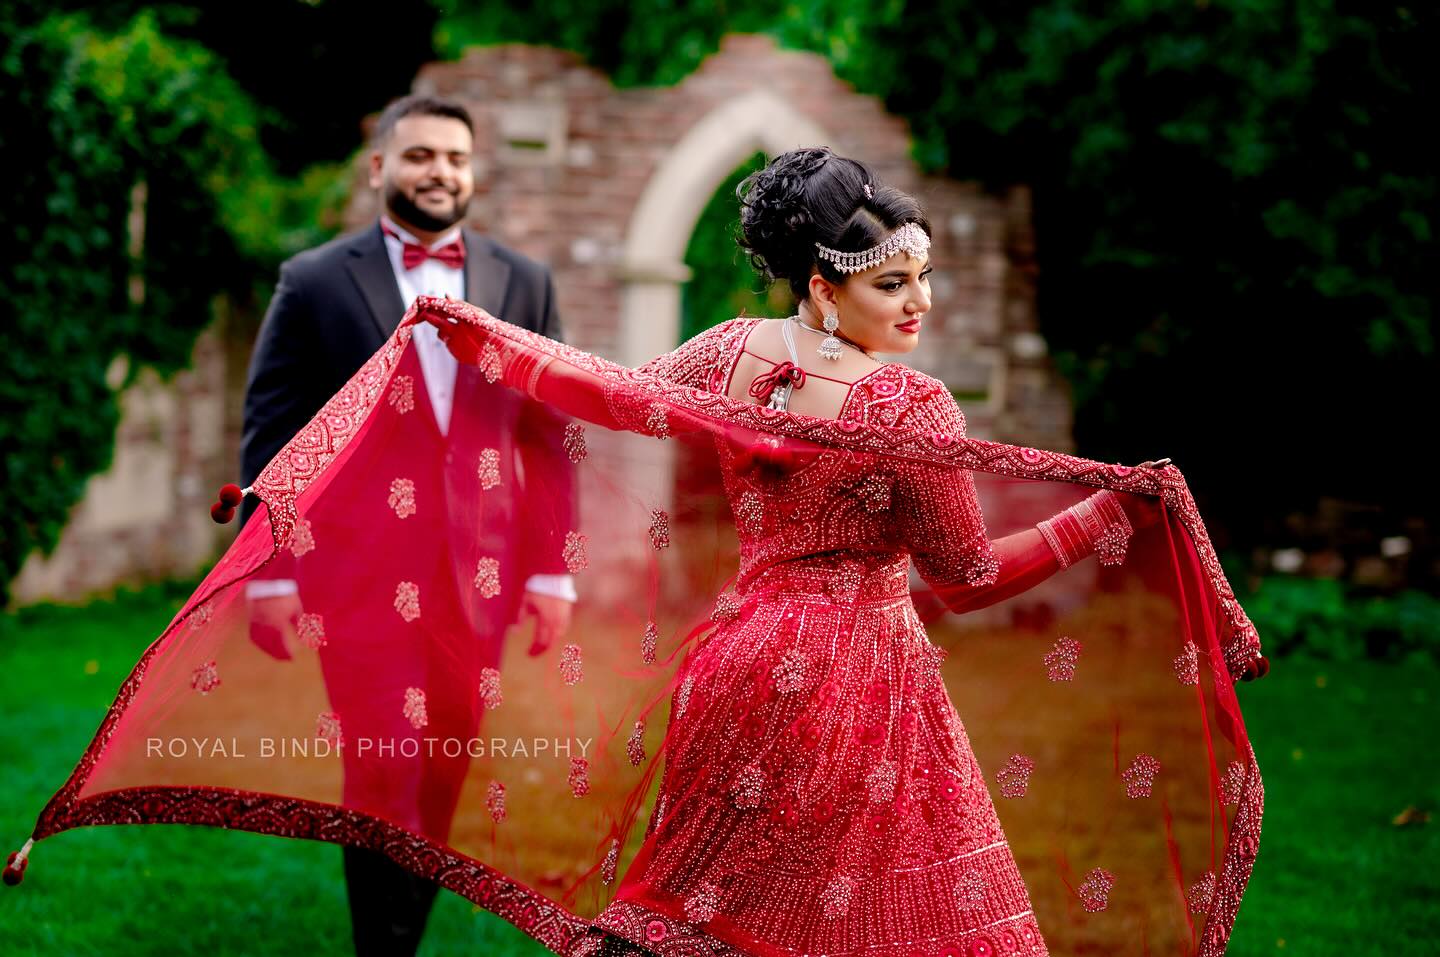 Royal Bindi’s Asian wedding photography in London.